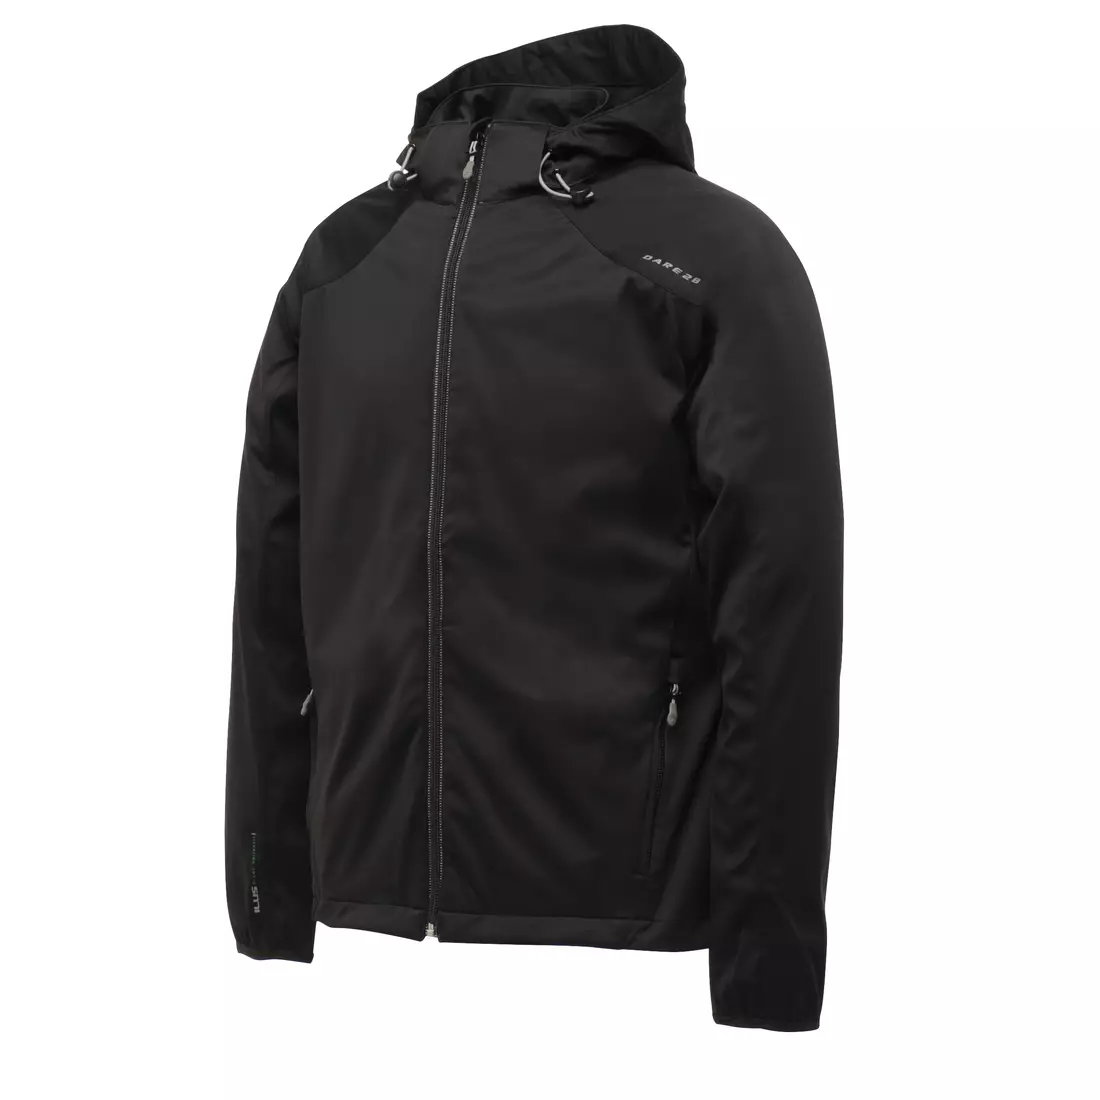 DARE2B TACTICAL SOFTSHELL jacket, DML-104-800